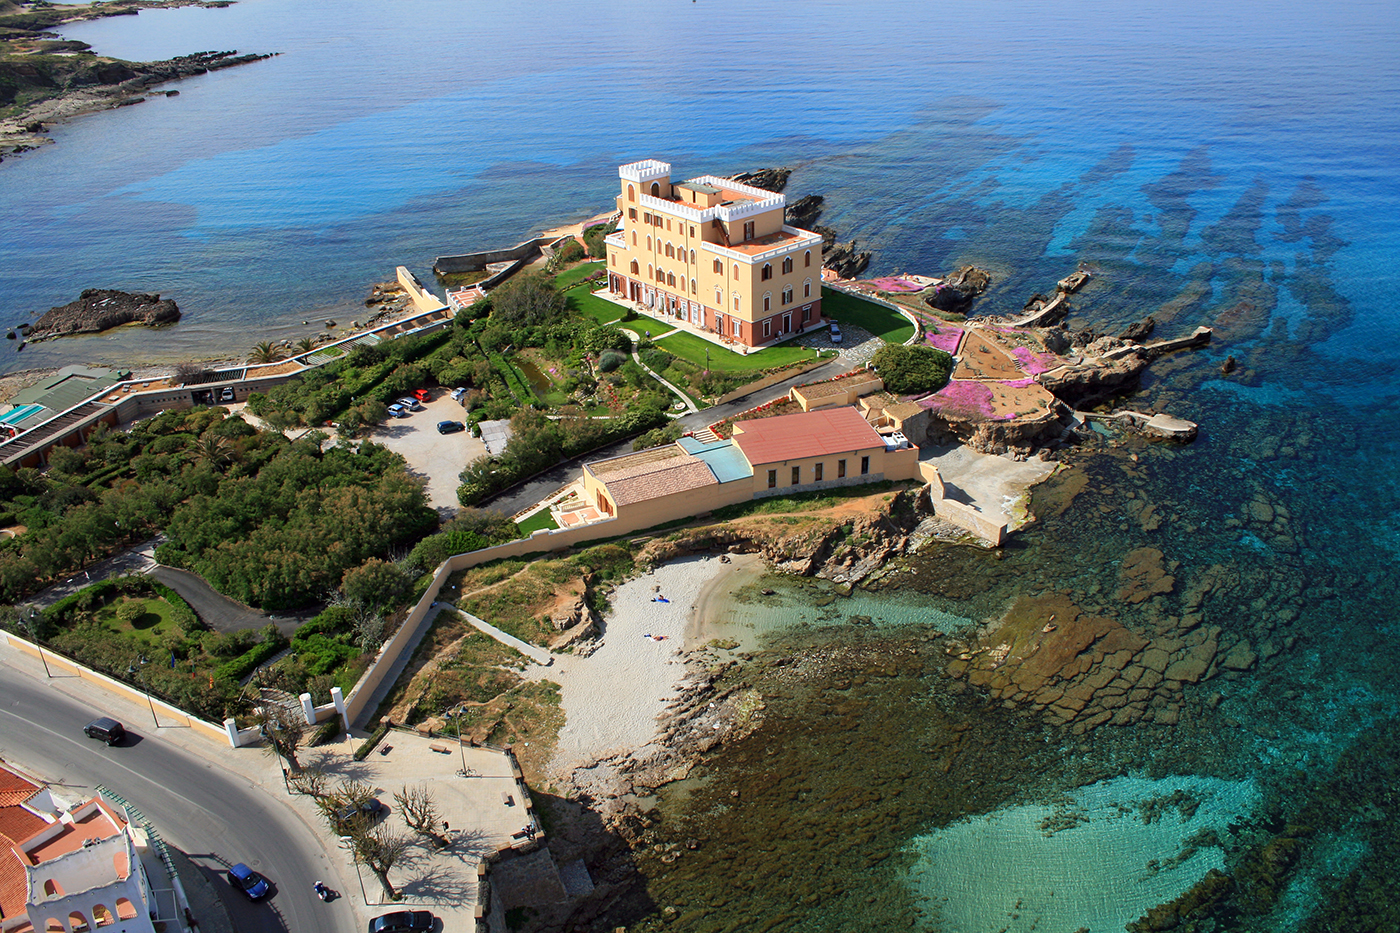 Sardegna, Alghero – Affascinante Villa sul porto